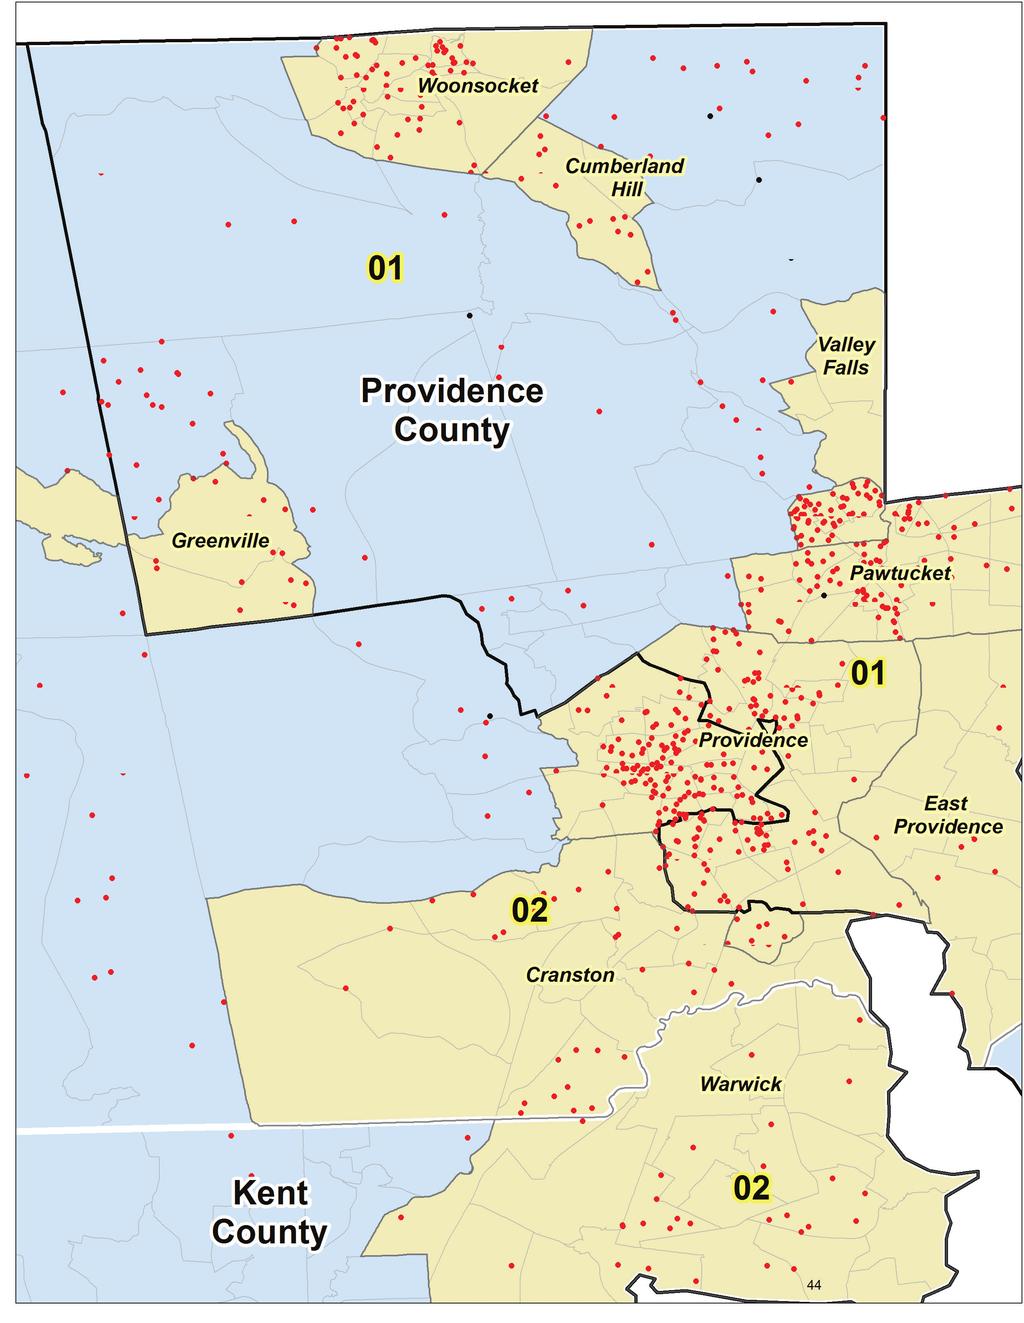 PUERTO RICAN POPULATION BY COUNTIES IN RHODE ISLAND PUERTO RICAN POPULATION 1 dot = 50 06-14 PUERTO RICAN